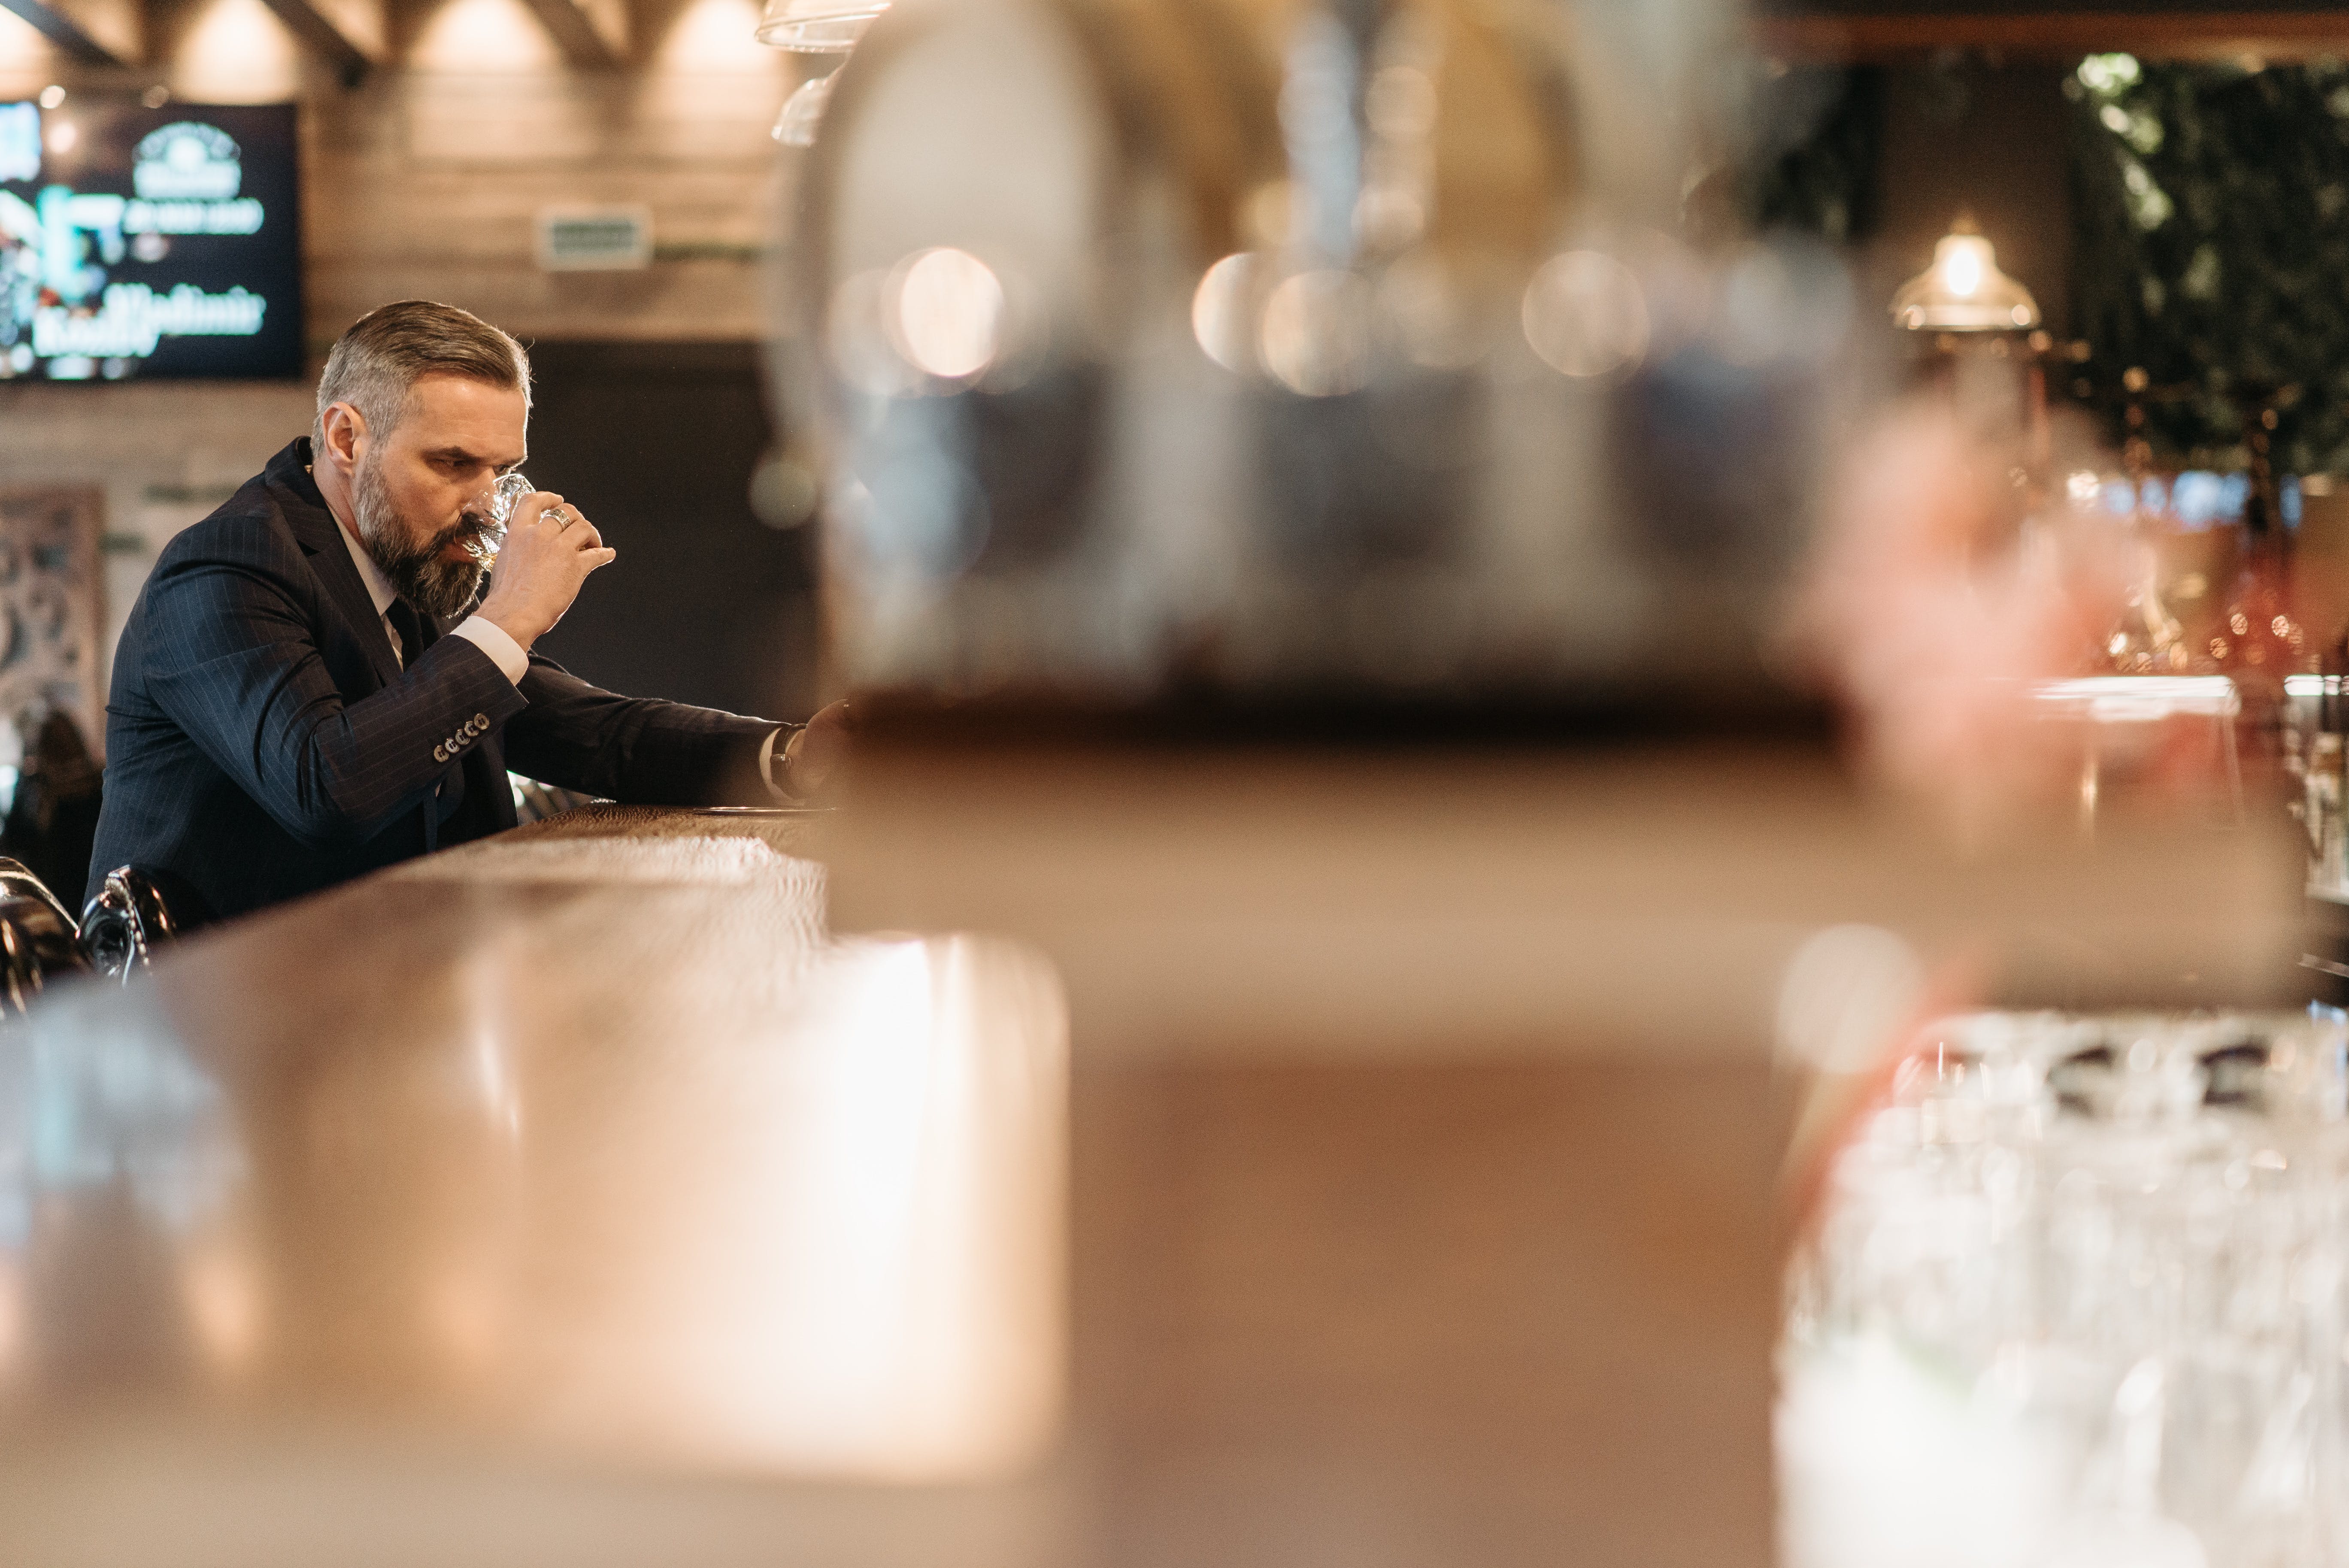 An older man having a drink at a bar | Source: Pexels